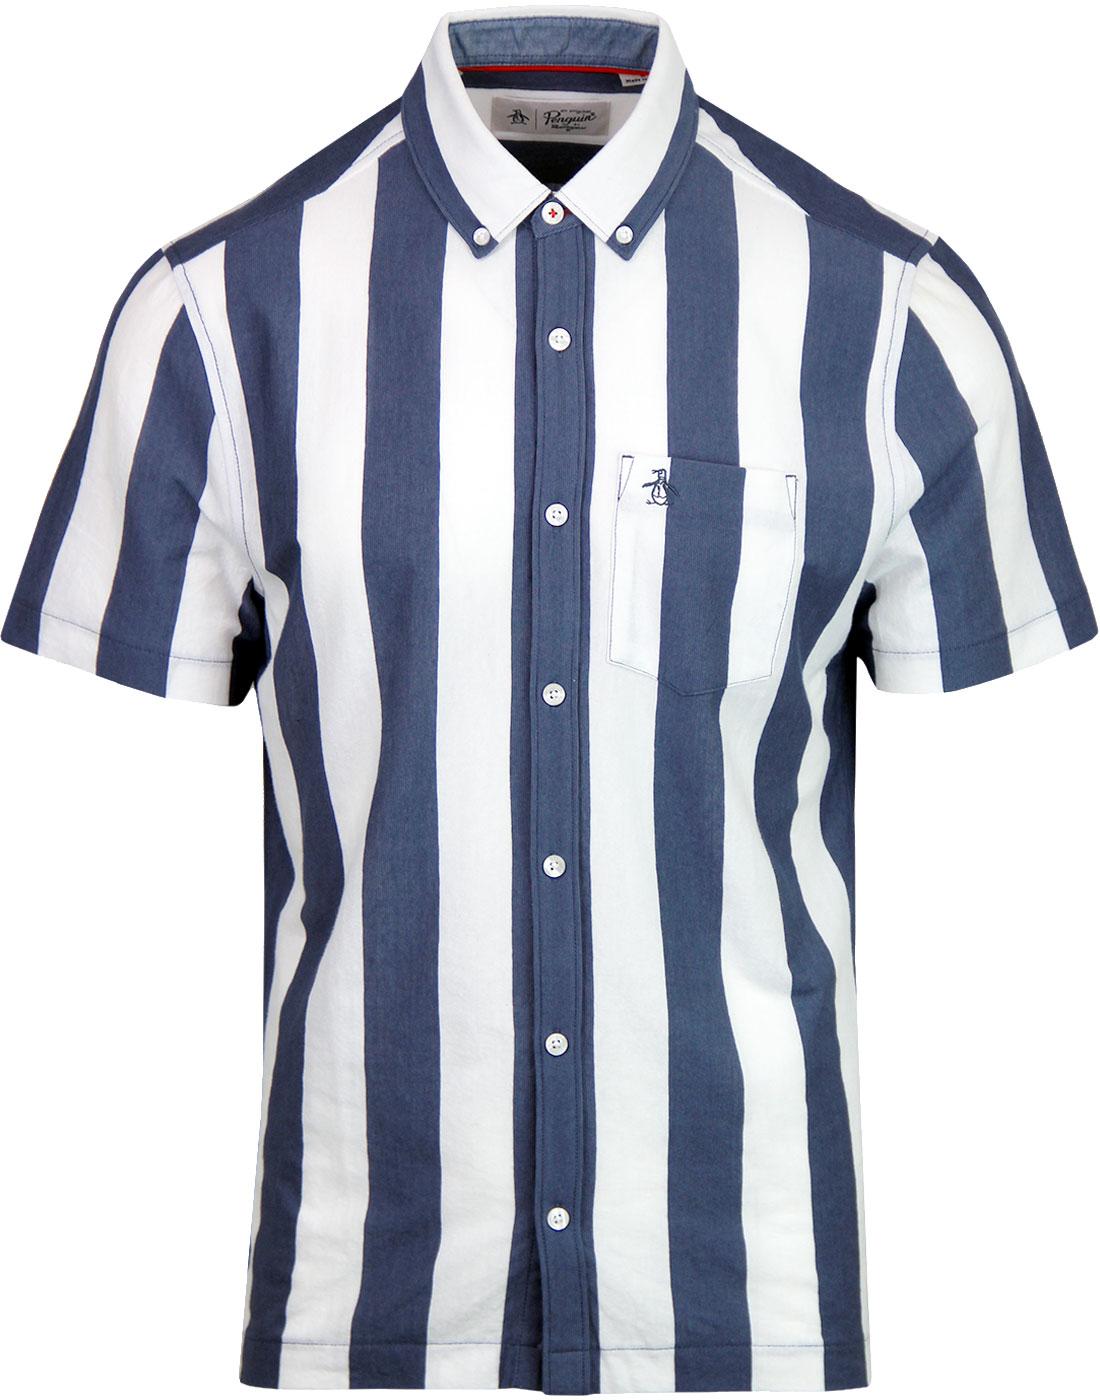 ORIGINAL PENGUIN Knitted Vertical Stripe Mod Shirt in Indigo